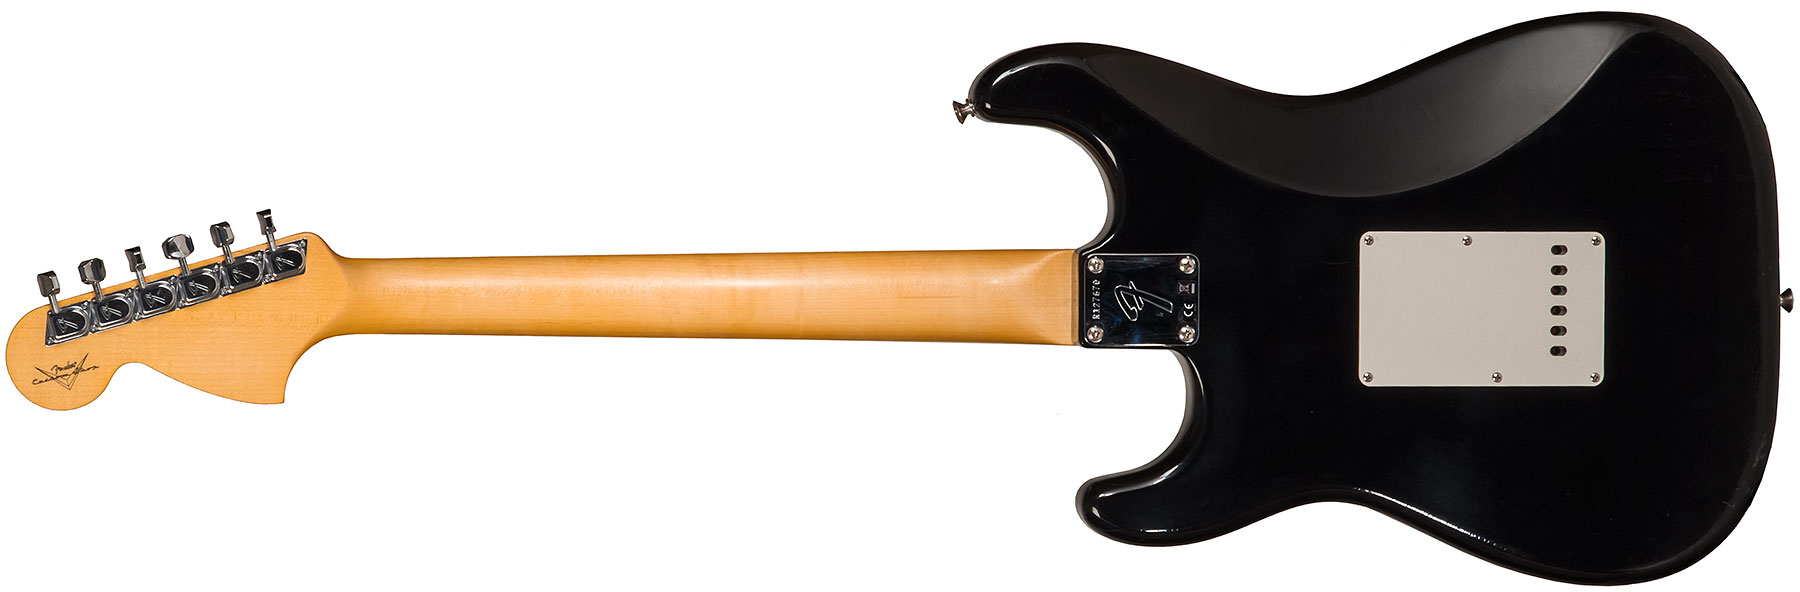 Fender Custom Shop Strat 1969 3s Trem Mn #r127670 - Closet Classic Black - E-Gitarre in Str-Form - Variation 1